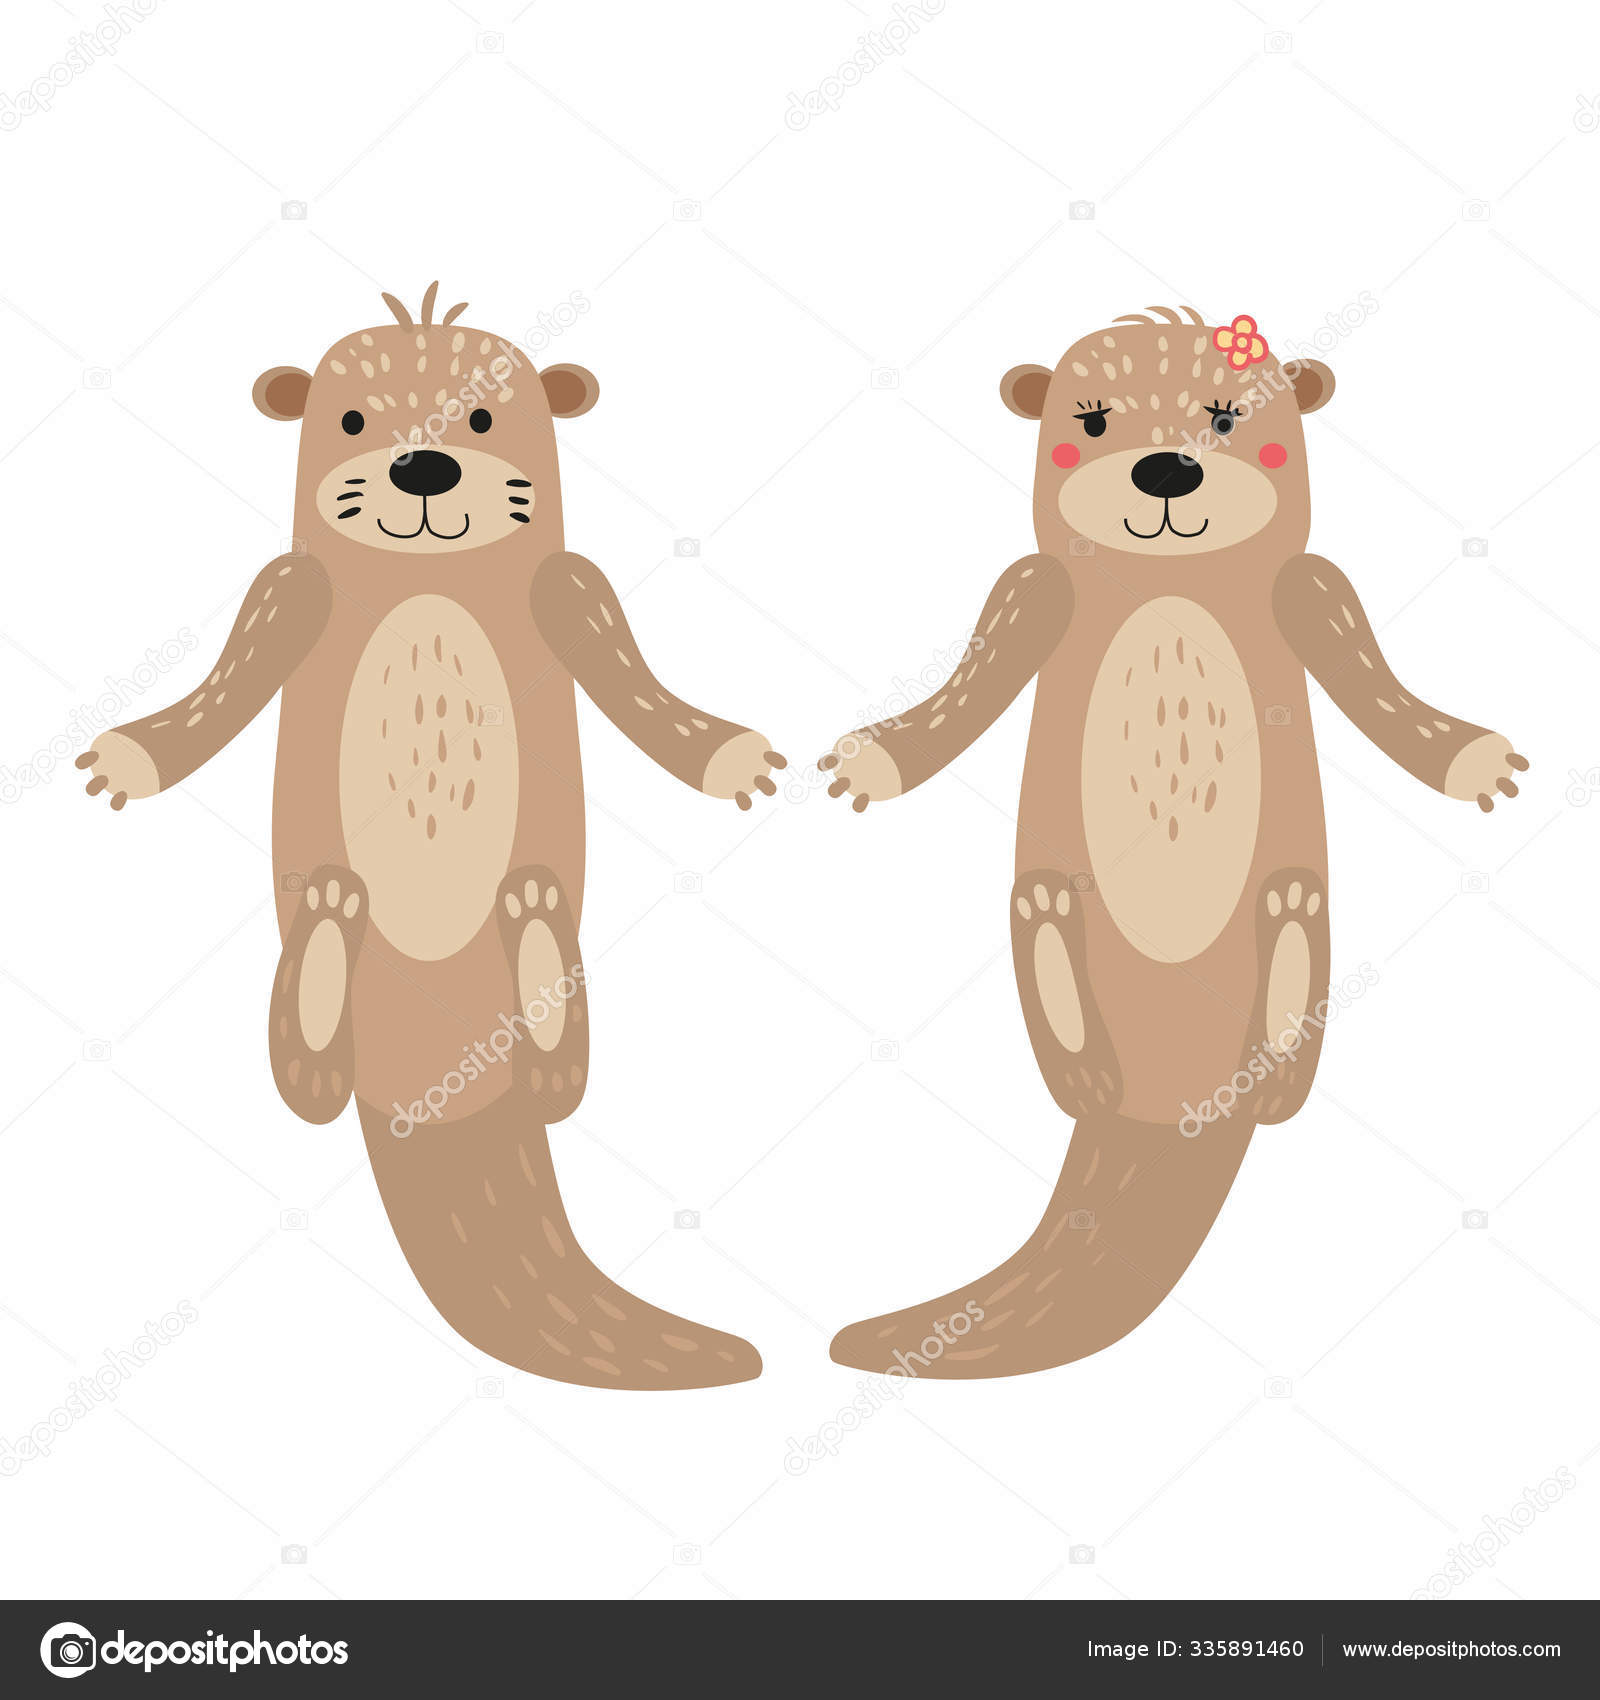 depositphotos_335891460-stock-illustration-otters-cute-cuple-animal-characters.jpg